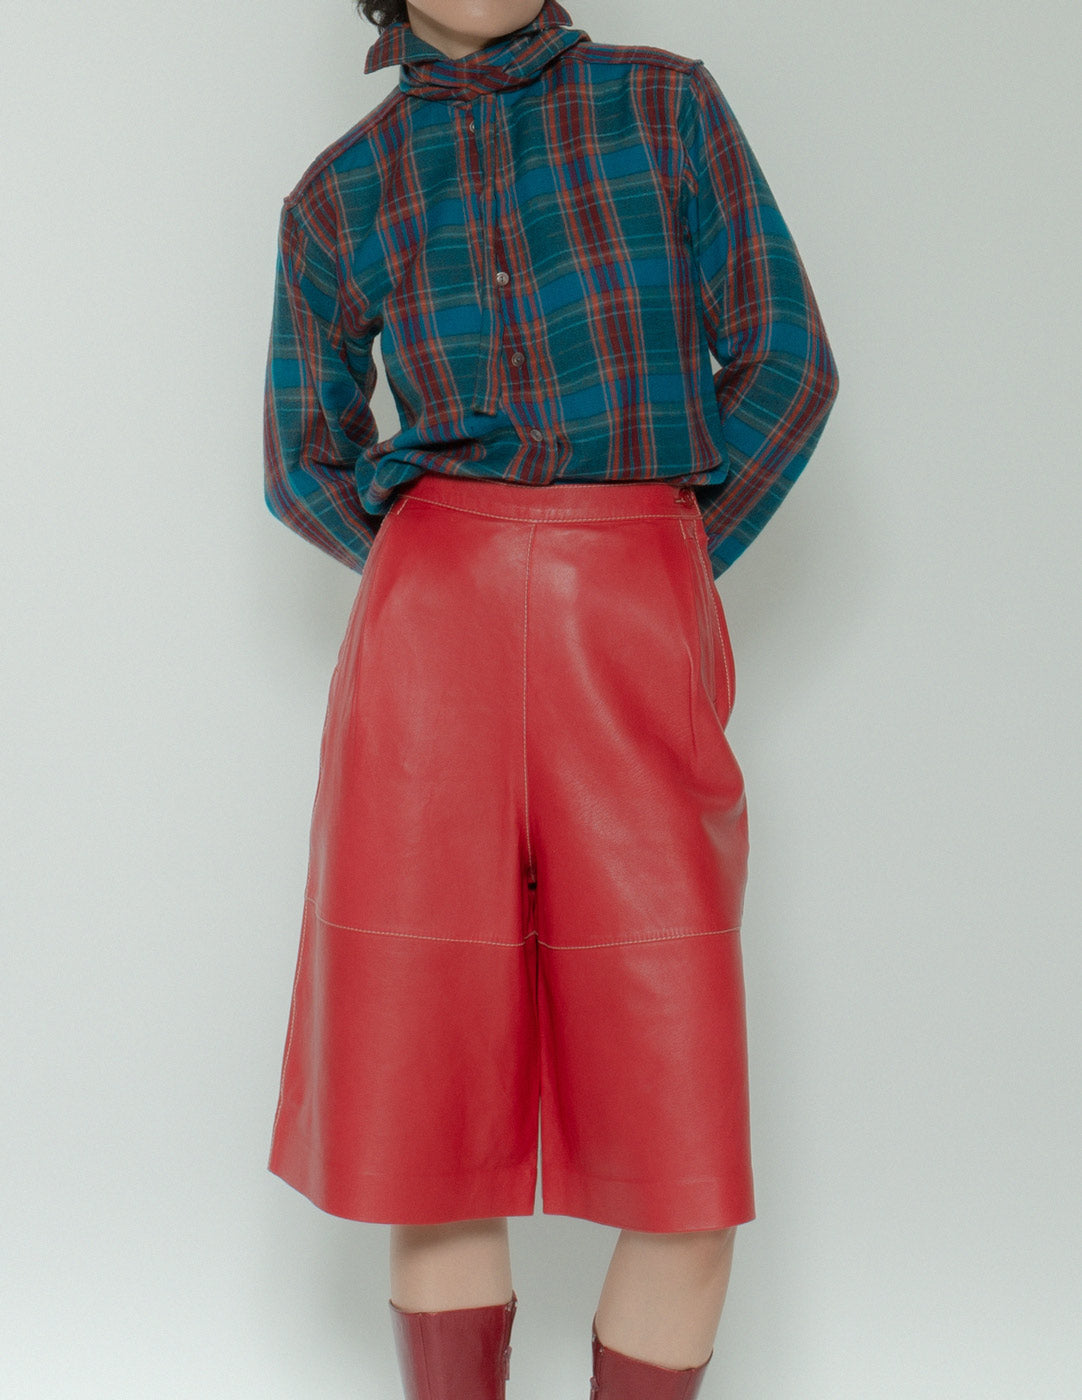 Gianfranco Ferré vintage red leather culottes front detail